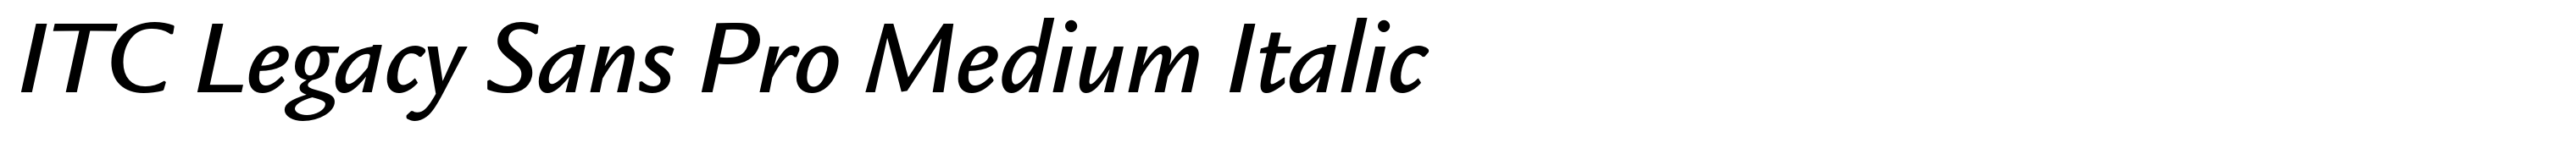 ITC Legacy Sans Pro Medium Italic